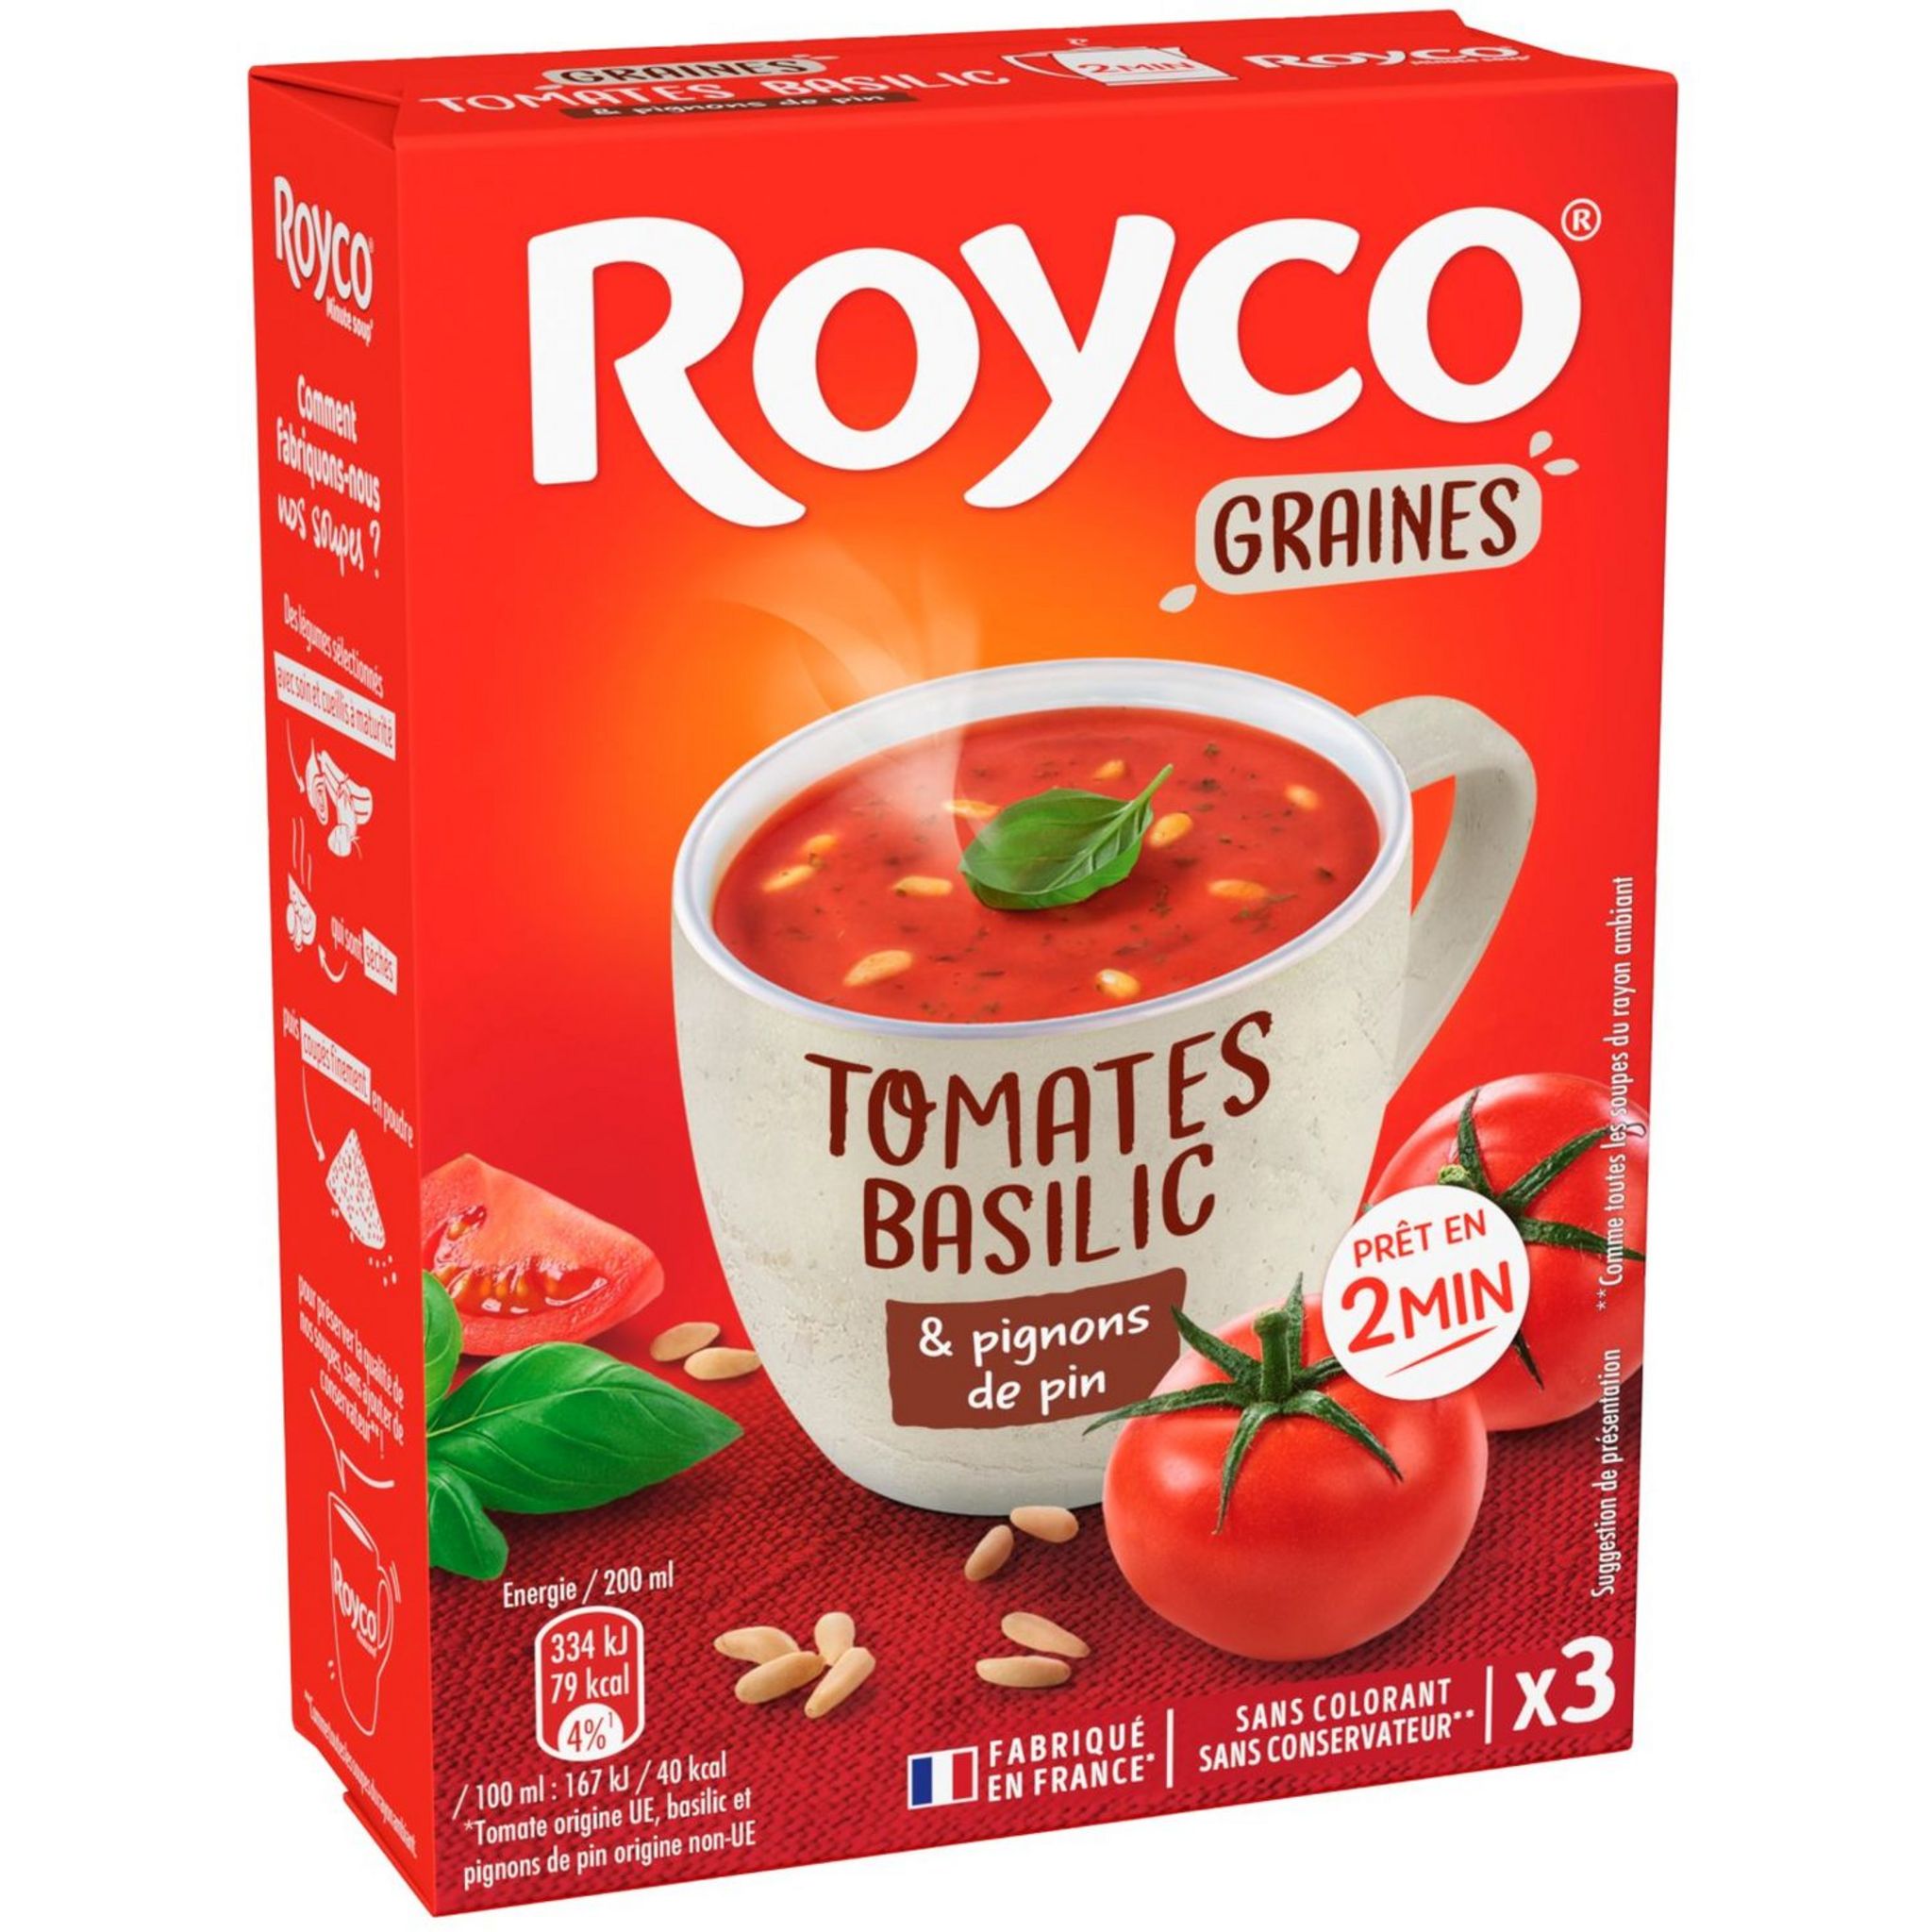 ROYCO CRUNCHY soupe tomates 20pc